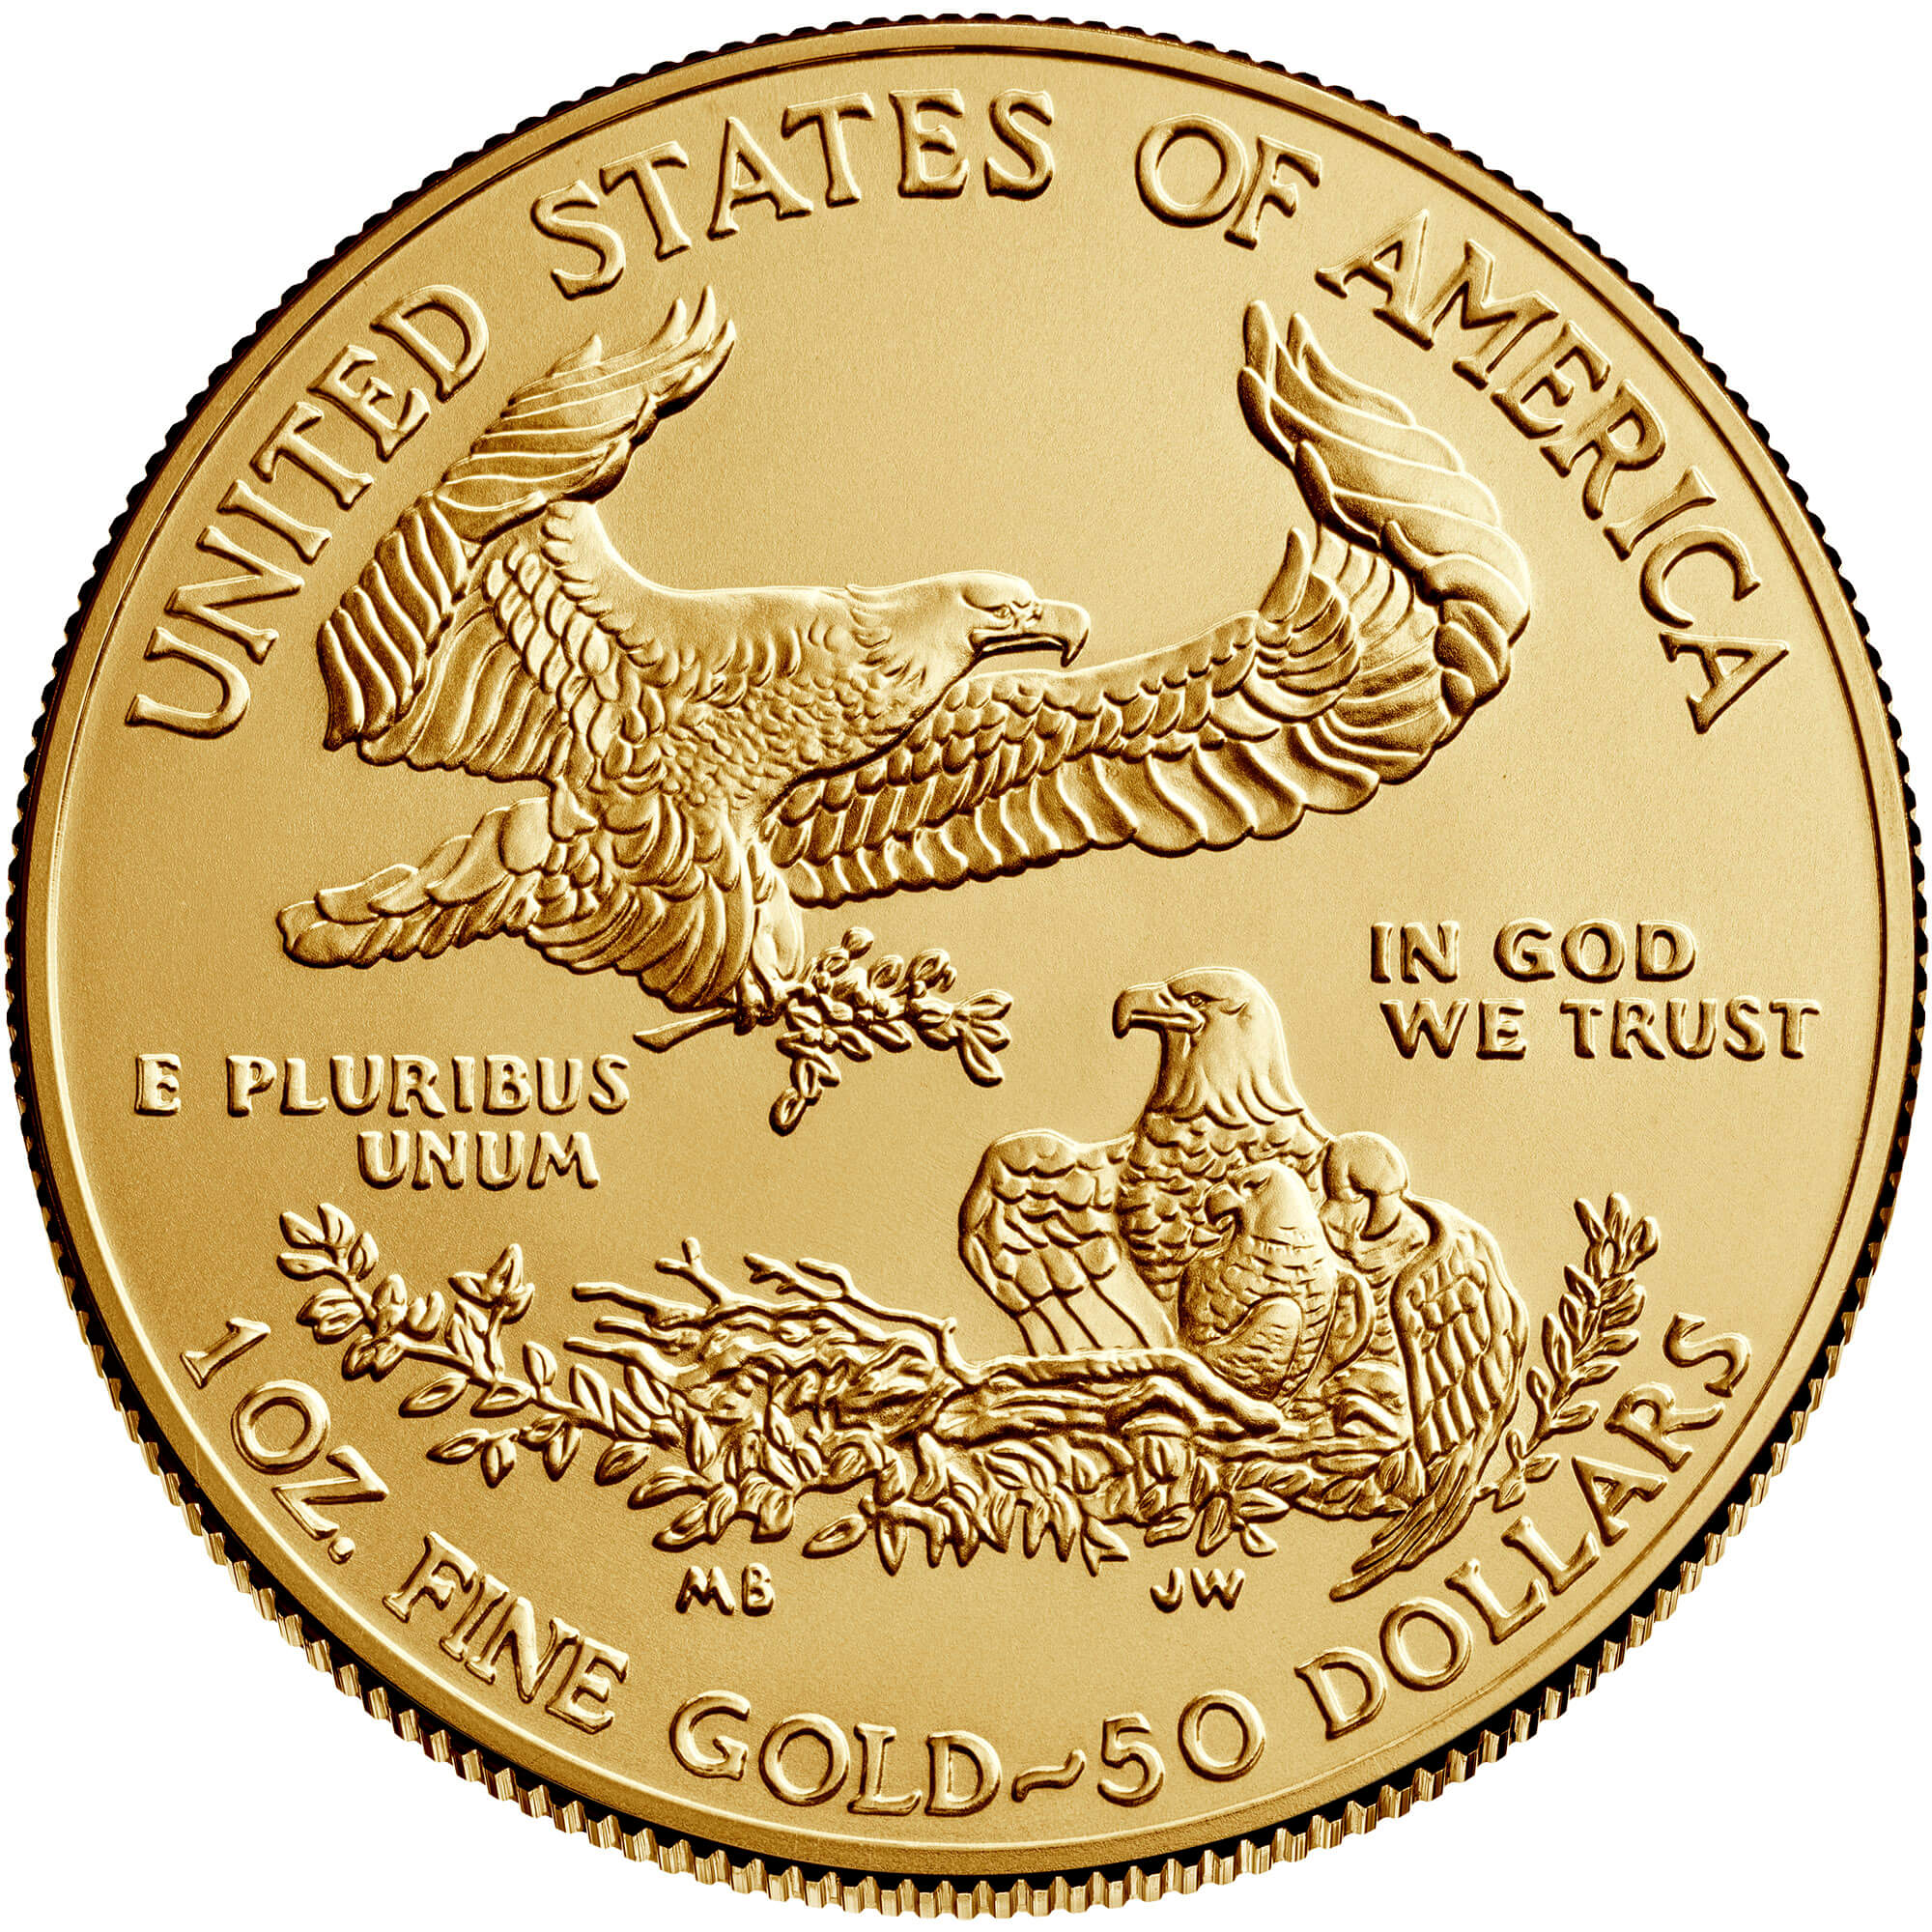 US 50 Dollars 2009 no mintmark